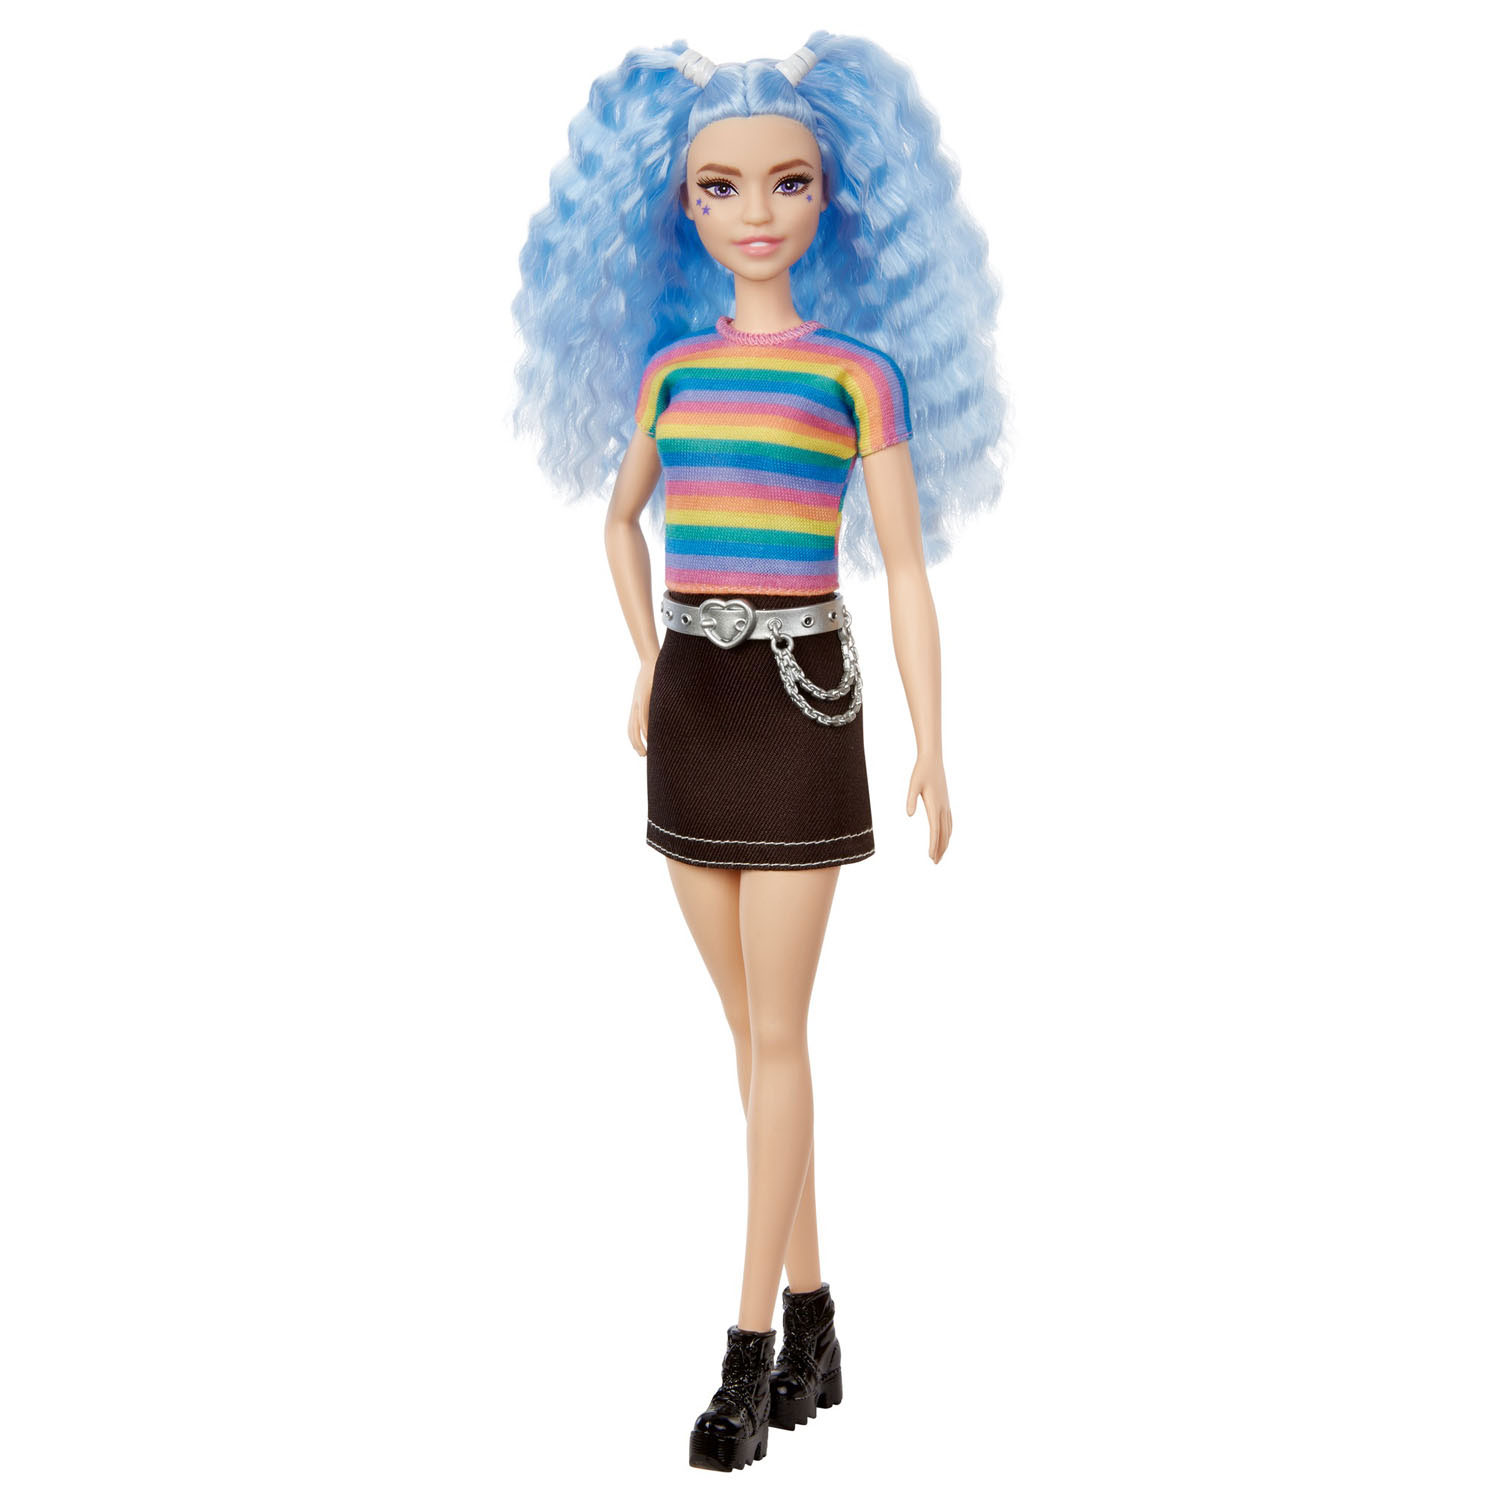 Barbie Fashionista Doll - Rainbow & Black Skirt | Thimble Toys